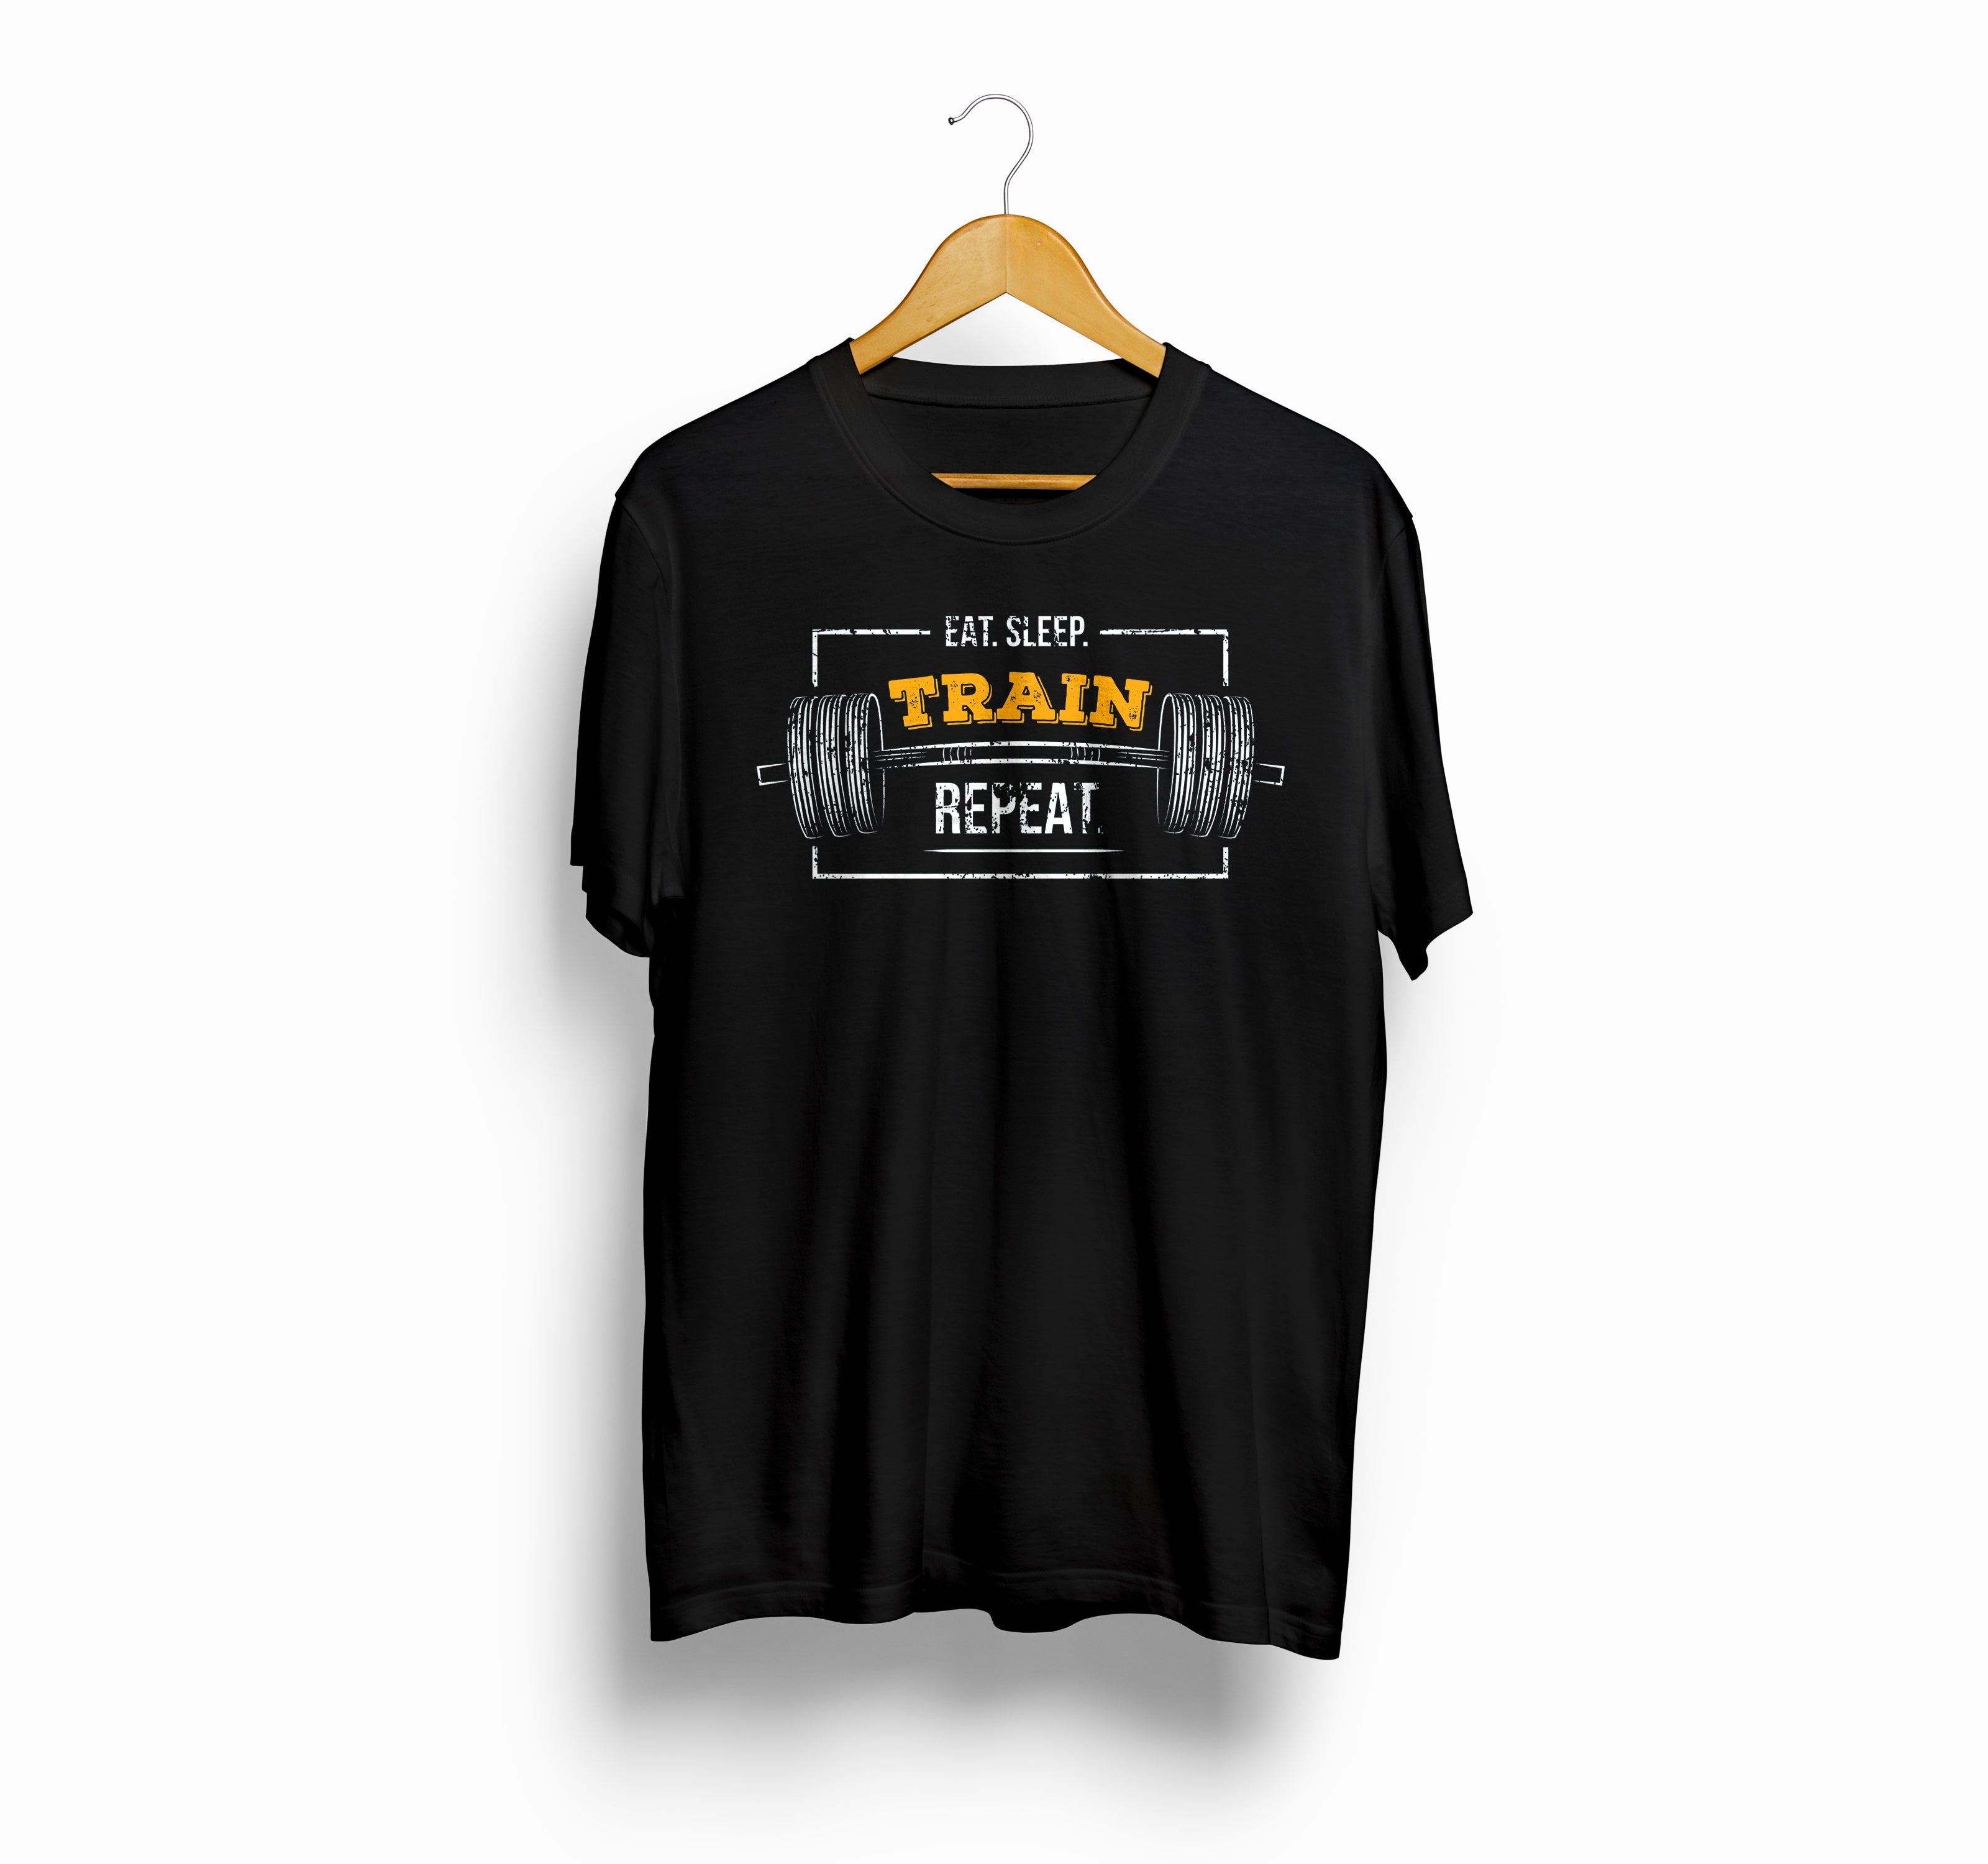 Bizzar's Eat, Sleep, Train and Repeat Black T-Shirt